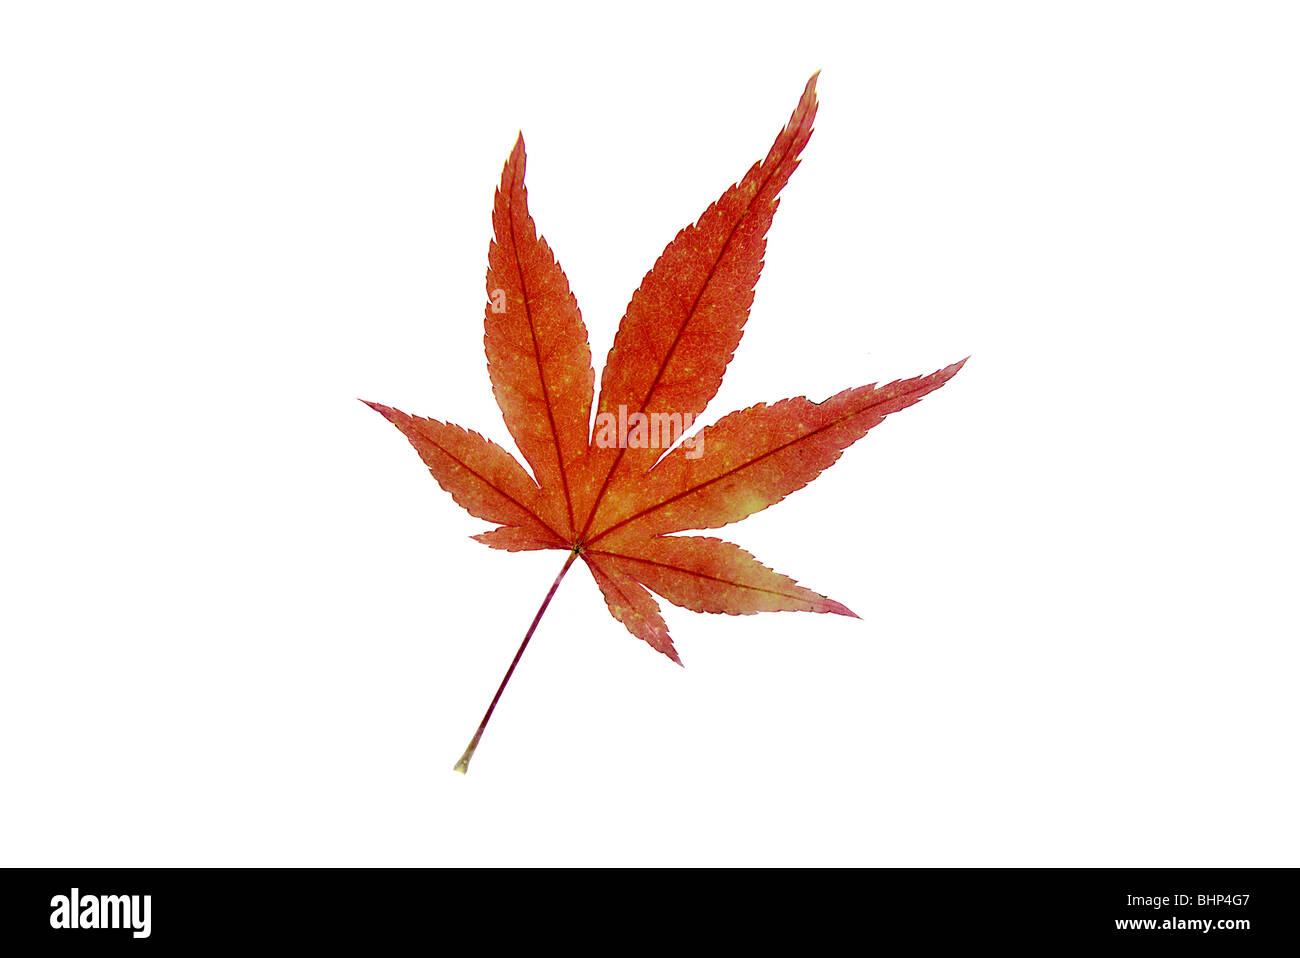 a single autumn leaf on a white background Stock Photo